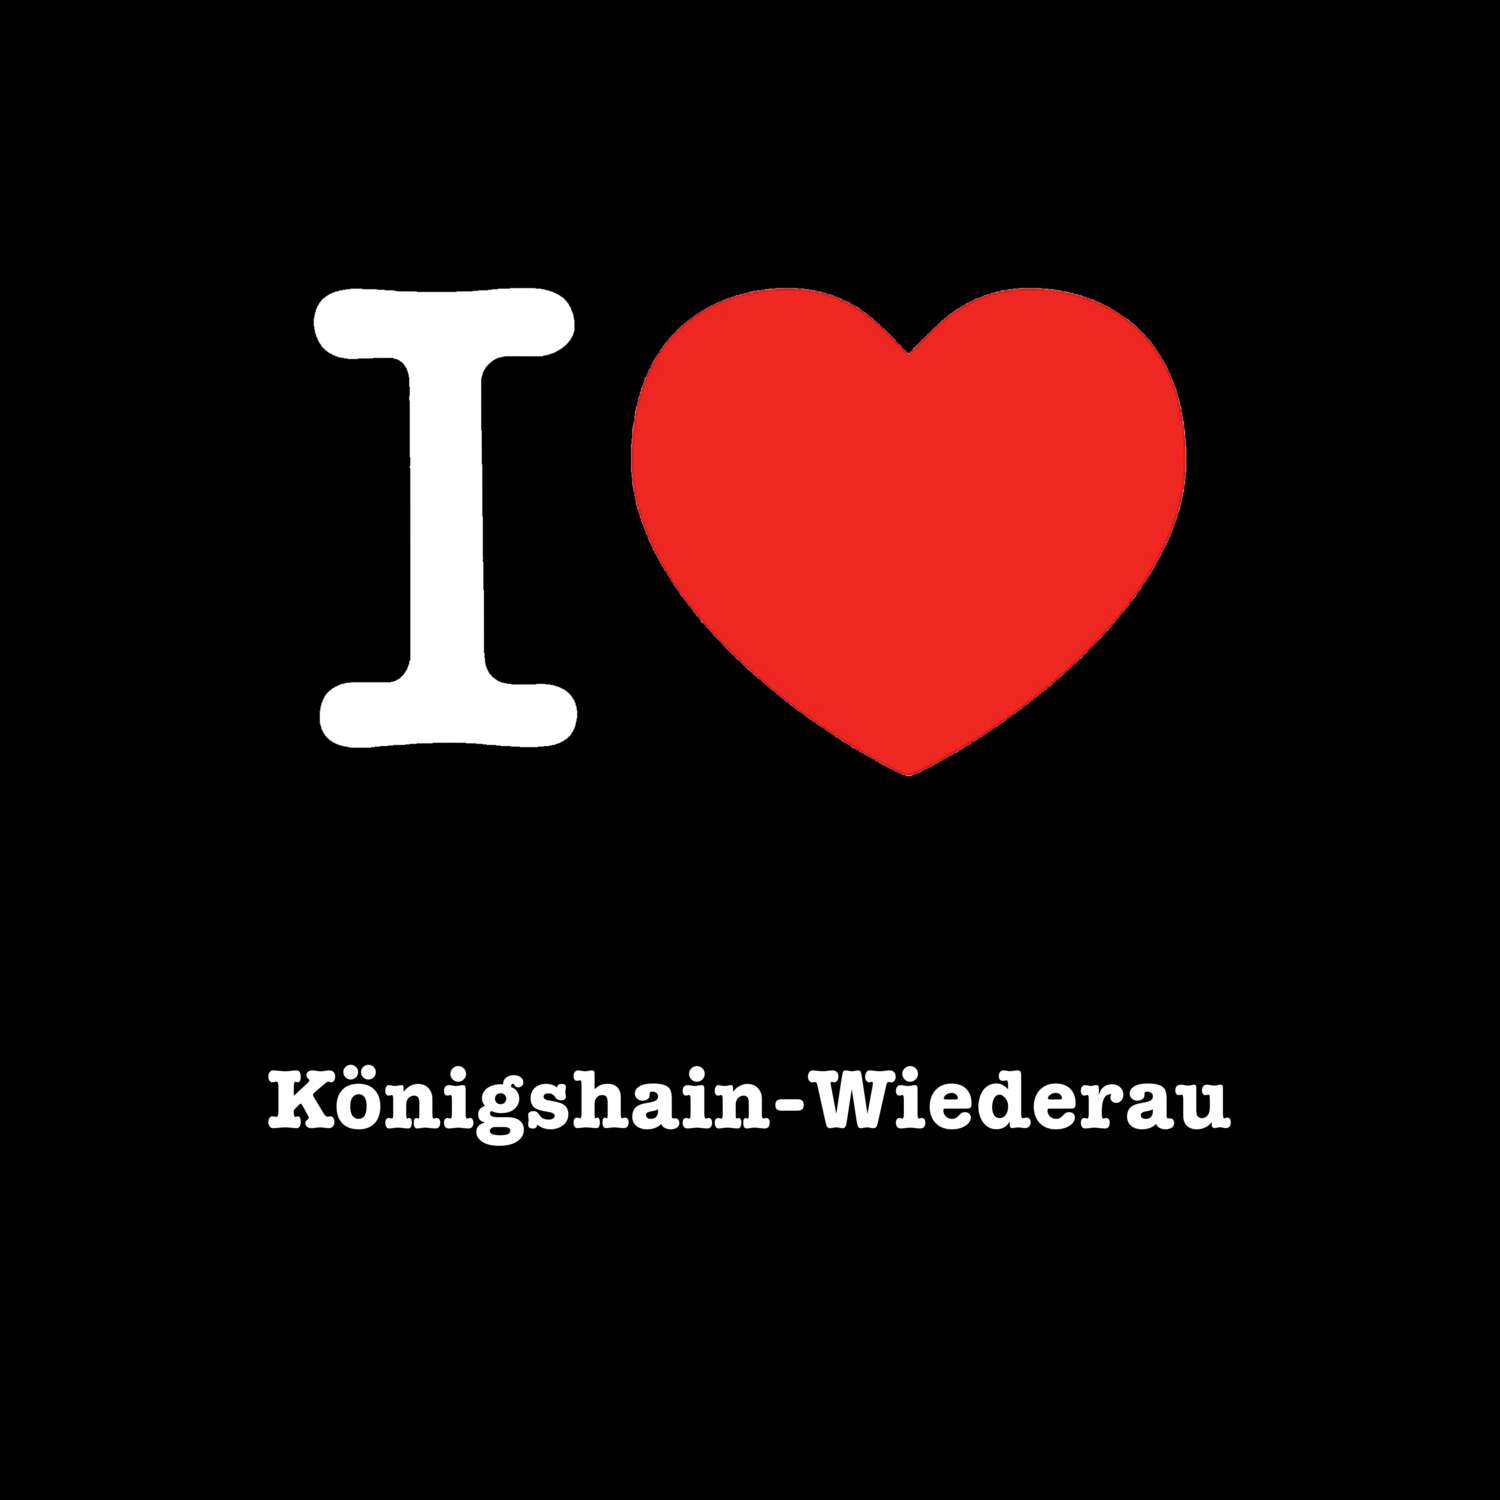 Königshain-Wiederau T-Shirt »I love«